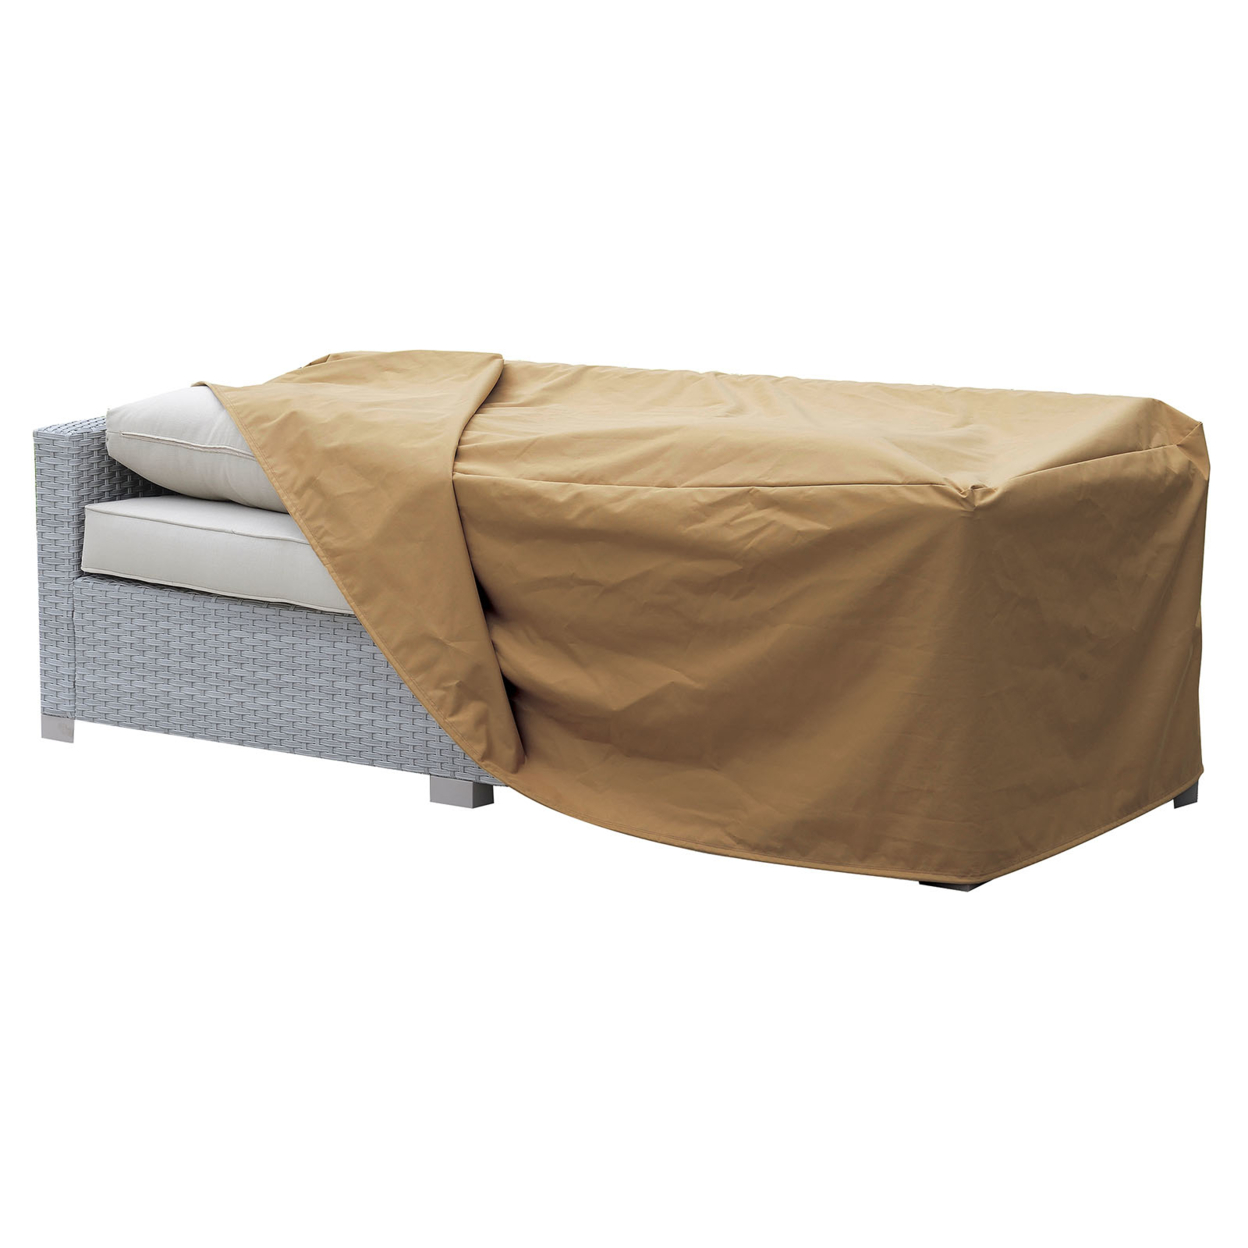 Waterproof Fabric Dust Cover For Outdoor Sofa, Medium, Brown- Saltoro Sherpi